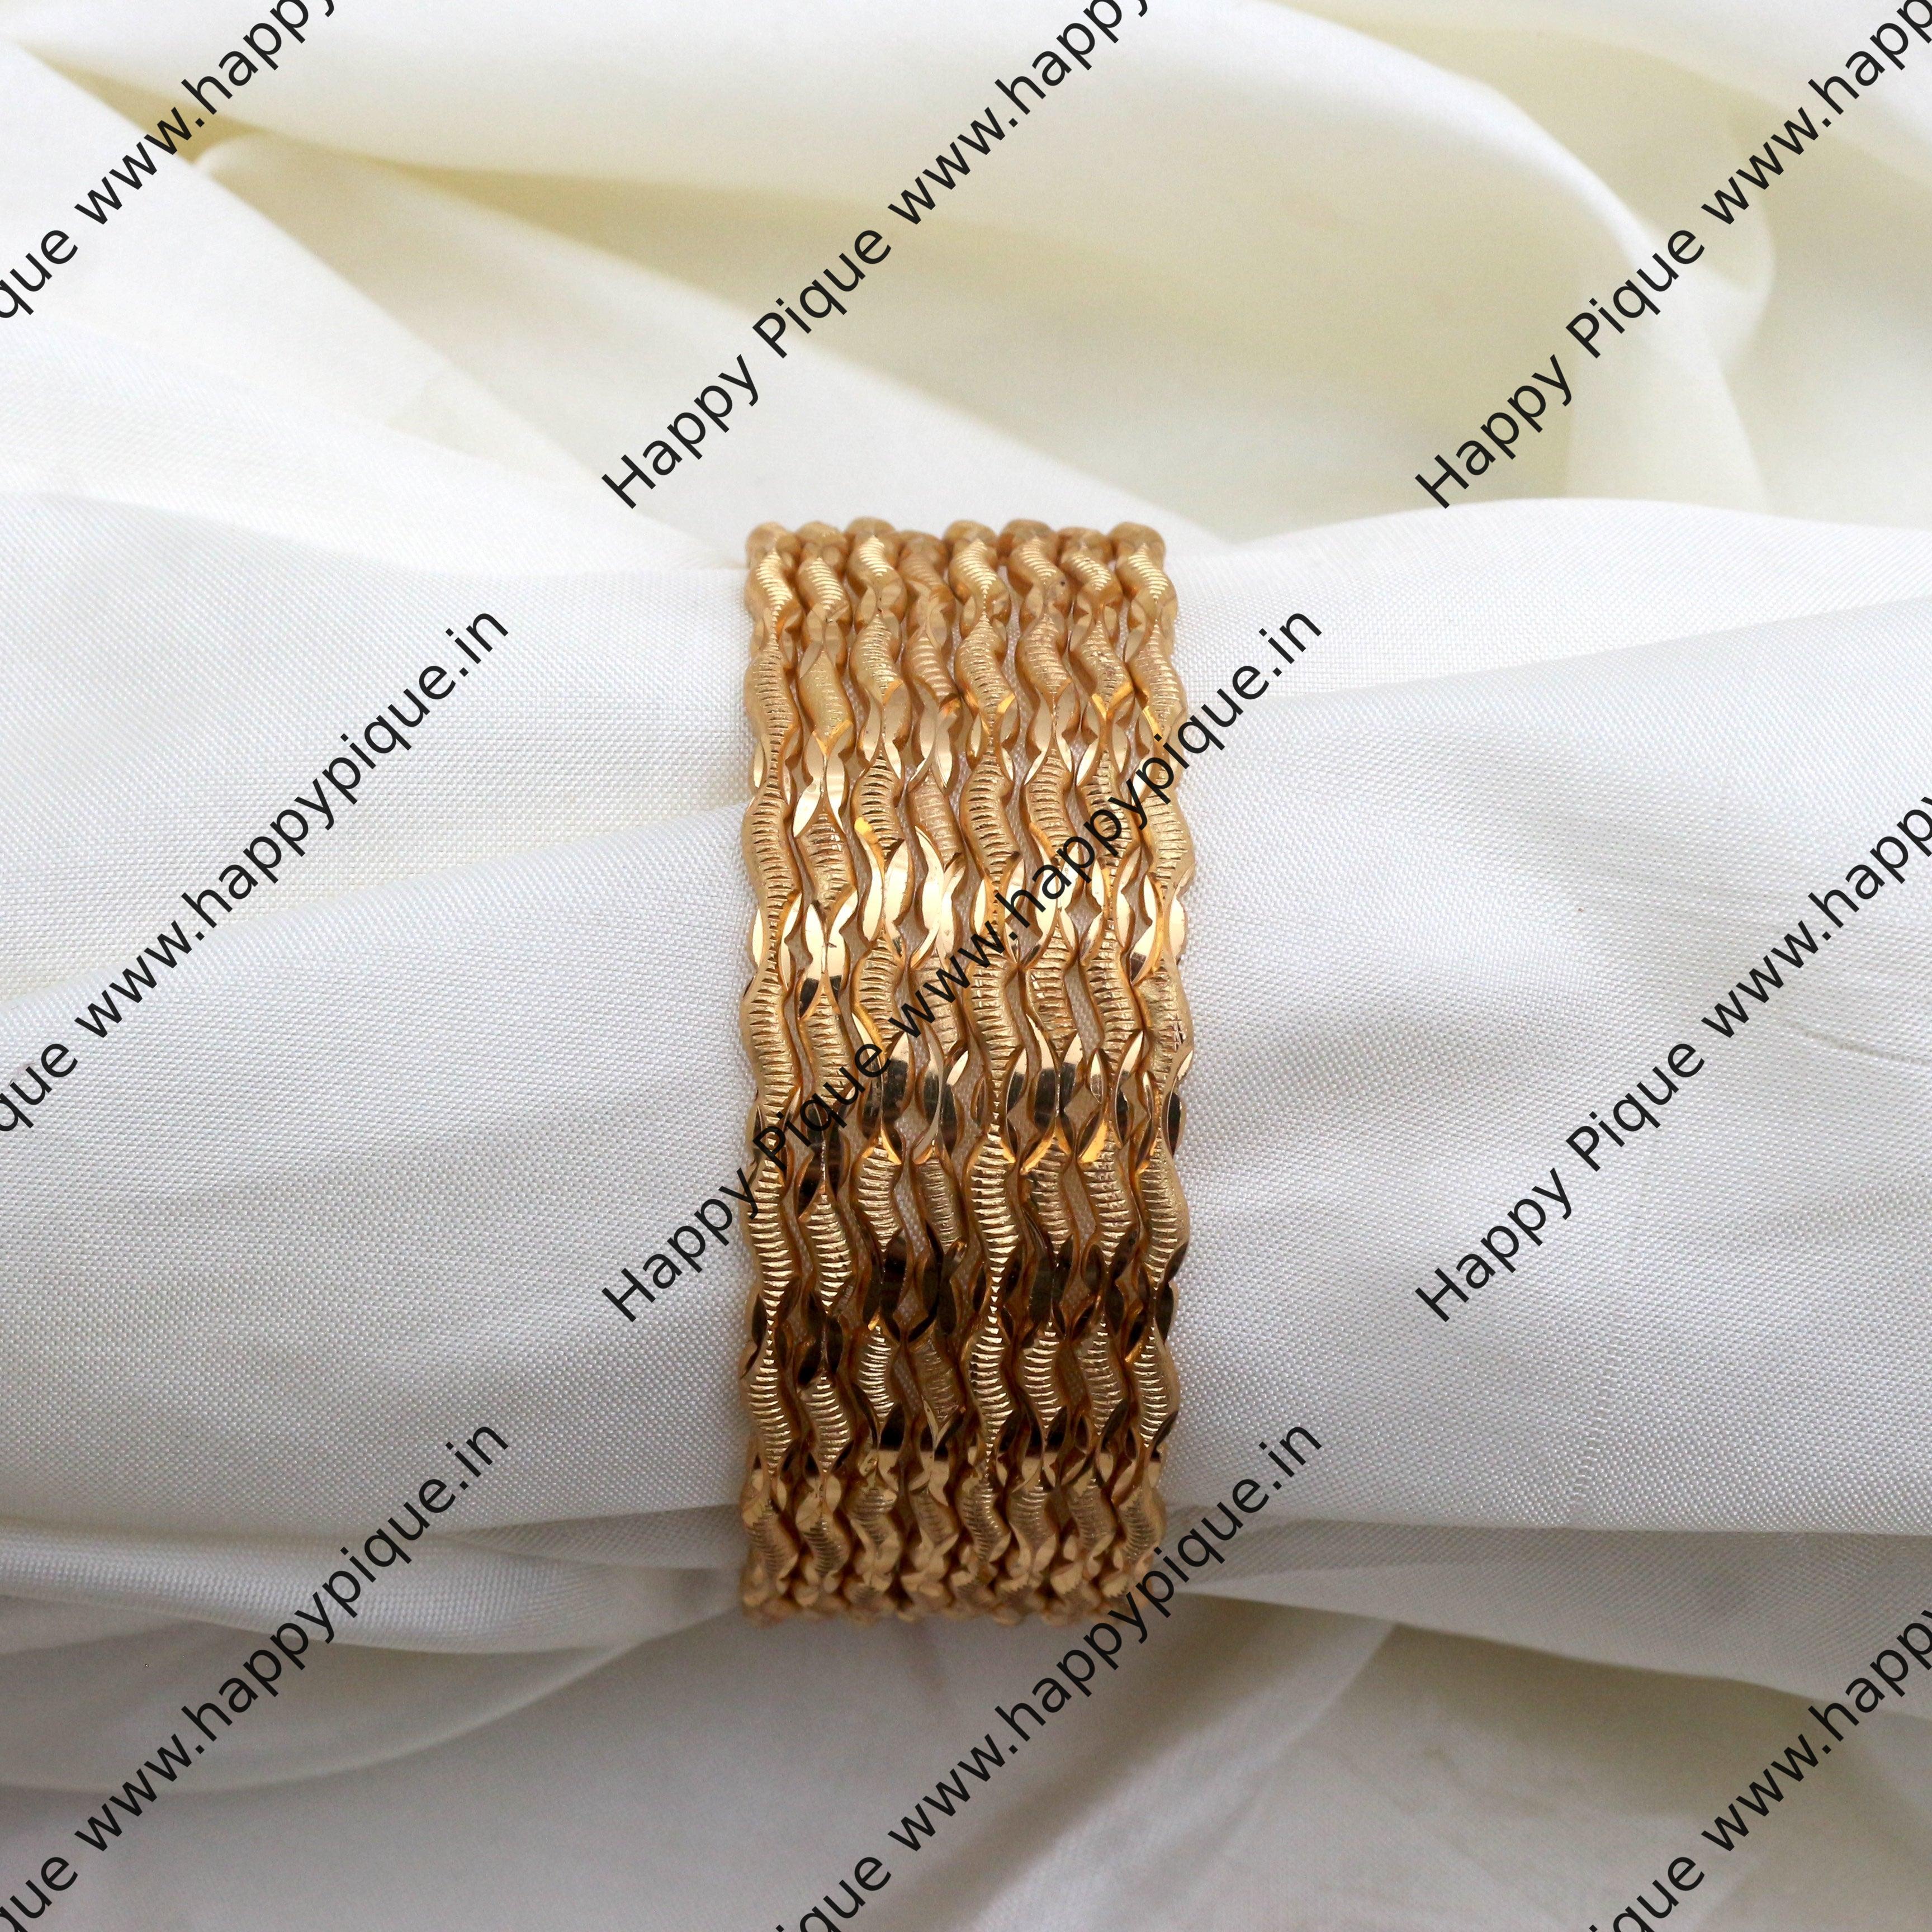 Theta Phi Alpha Woven Bracelet, White and Gold Design – SororityShop